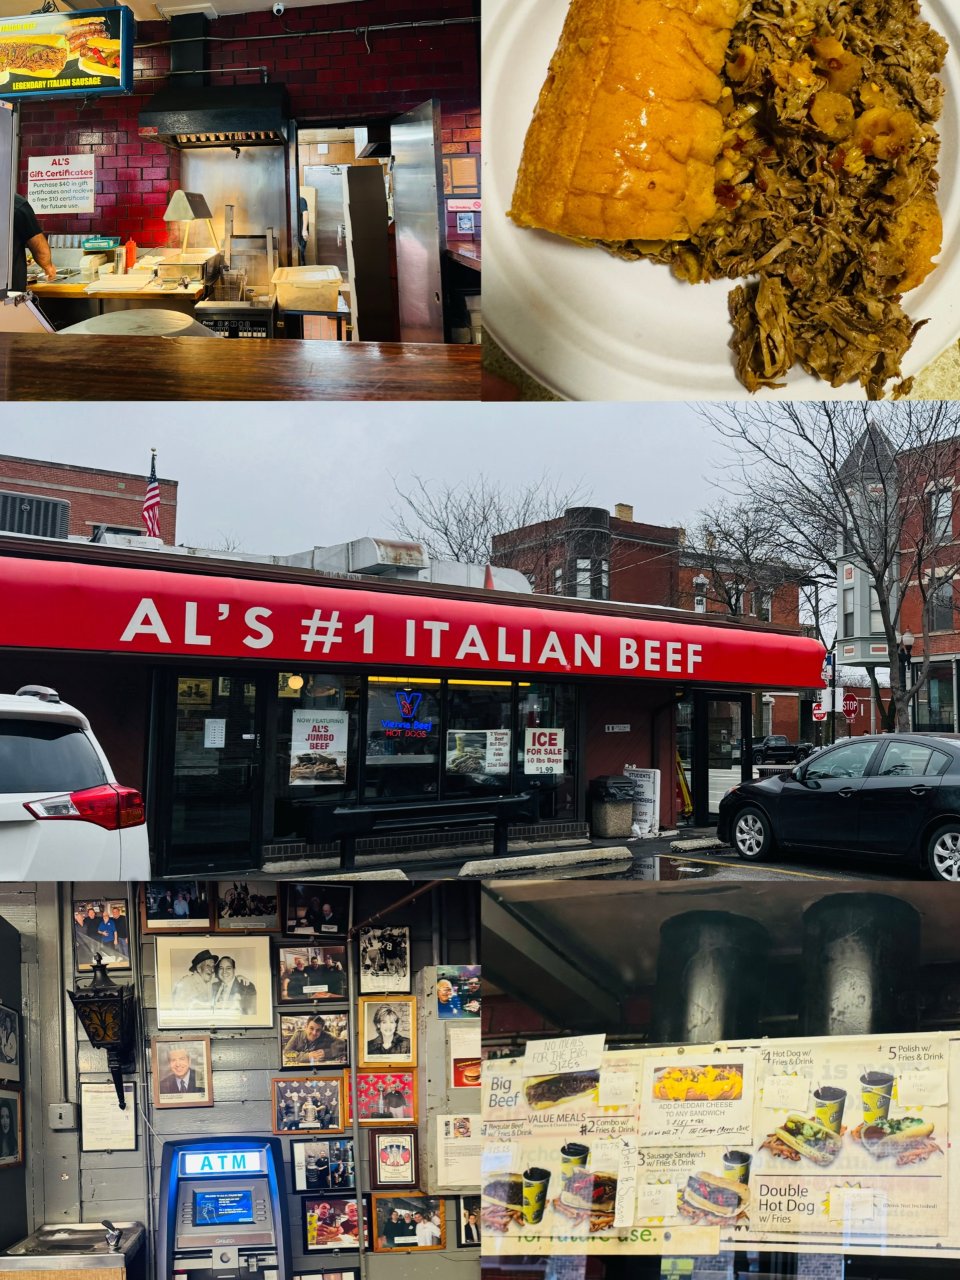 Al’s #1 Italian Beef...